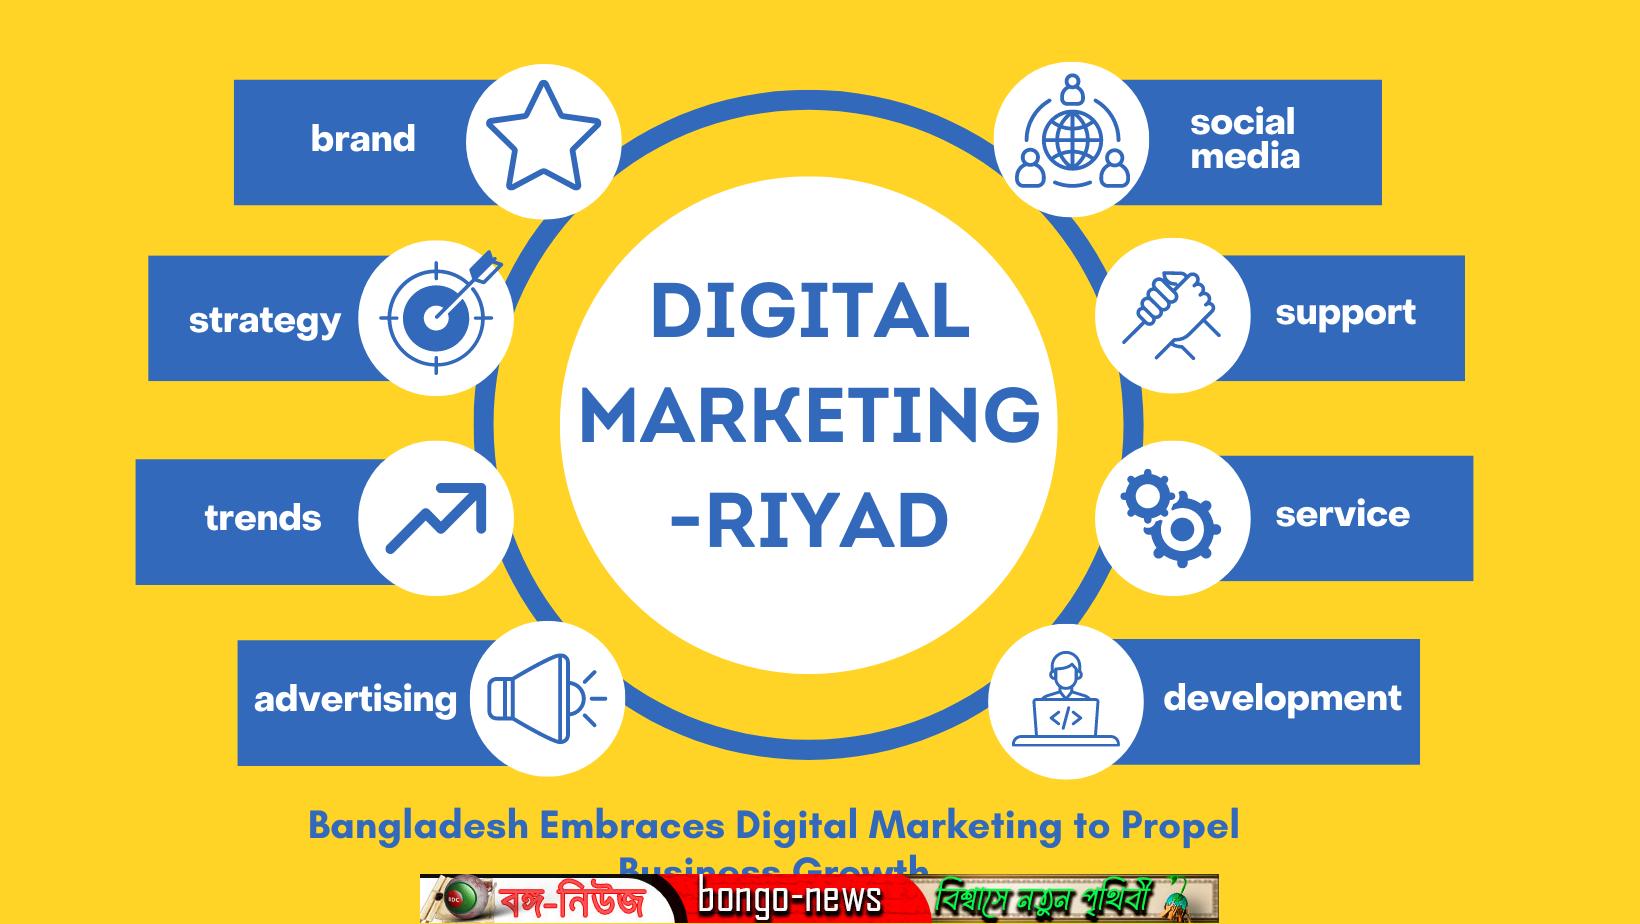 Bangladesh Embraces Digital Marketing to Propel Business Growth -Sajjad Kamal Riyad